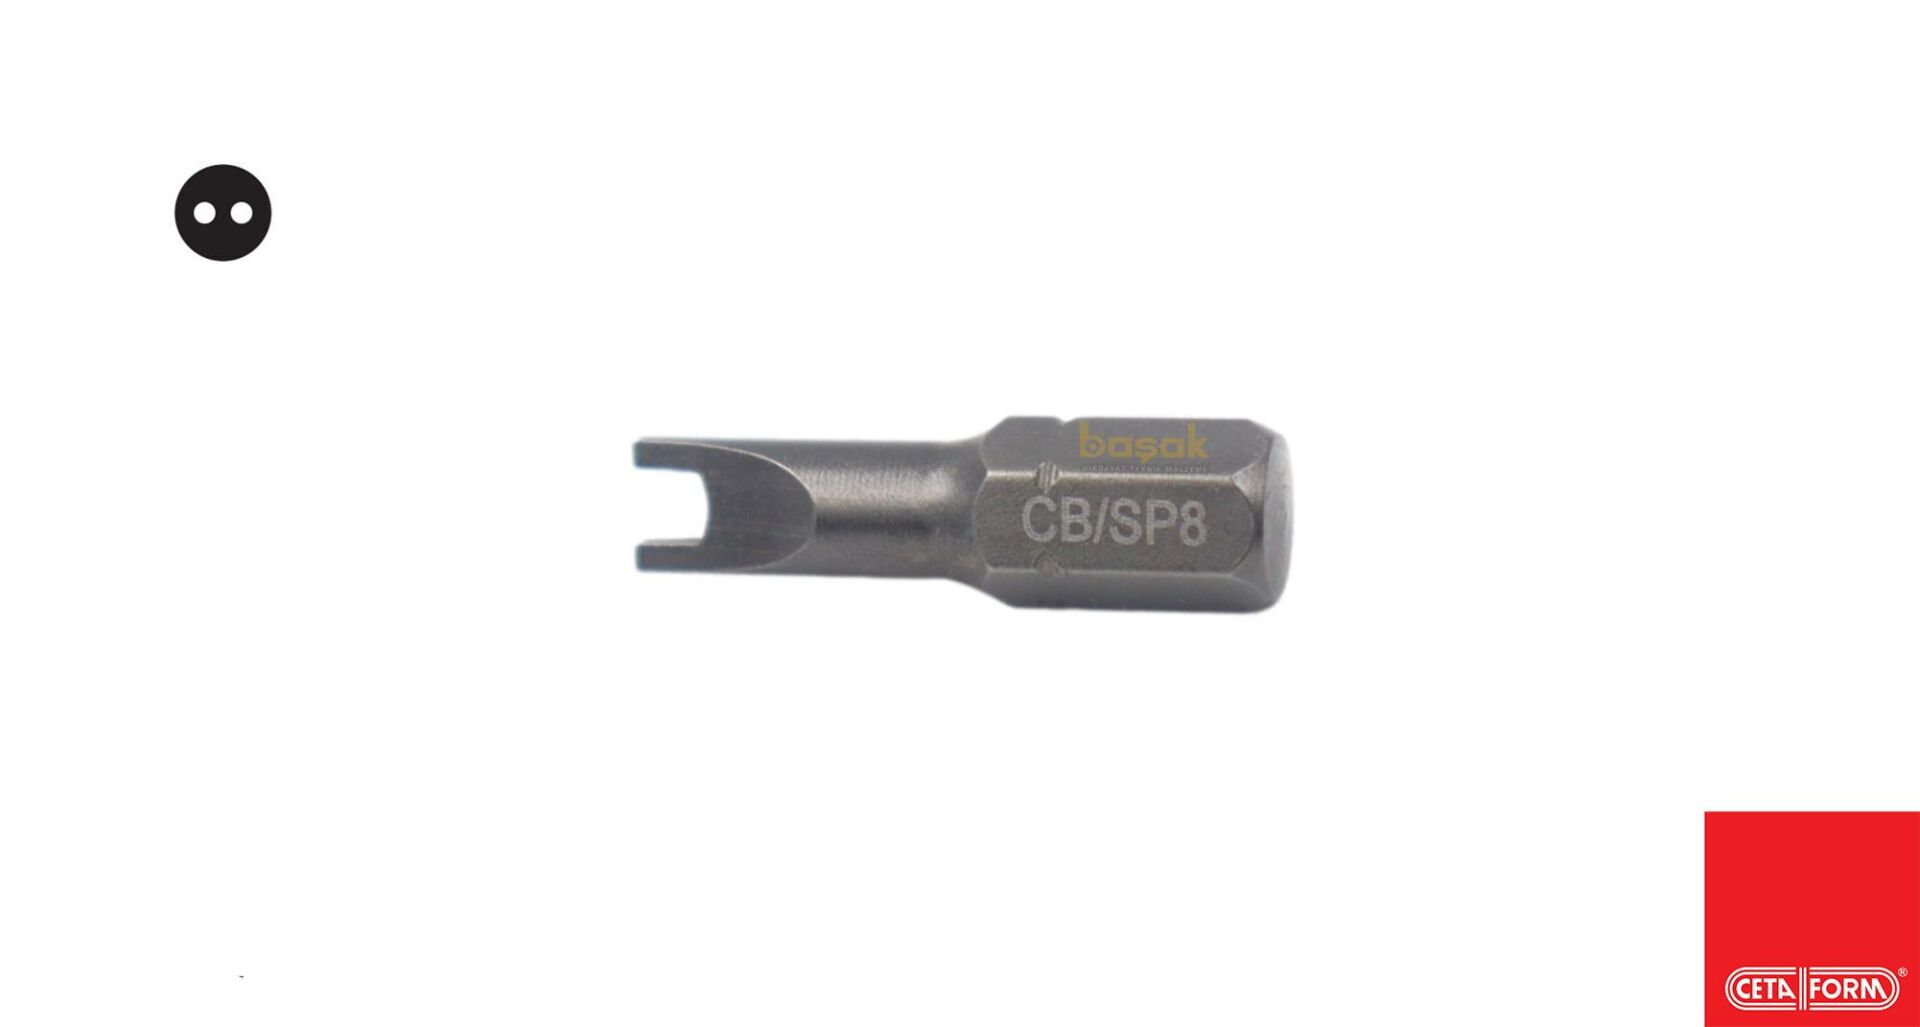 Ceta Form 08x25 mm Spanner U Tip Bits Uç CB/SP08